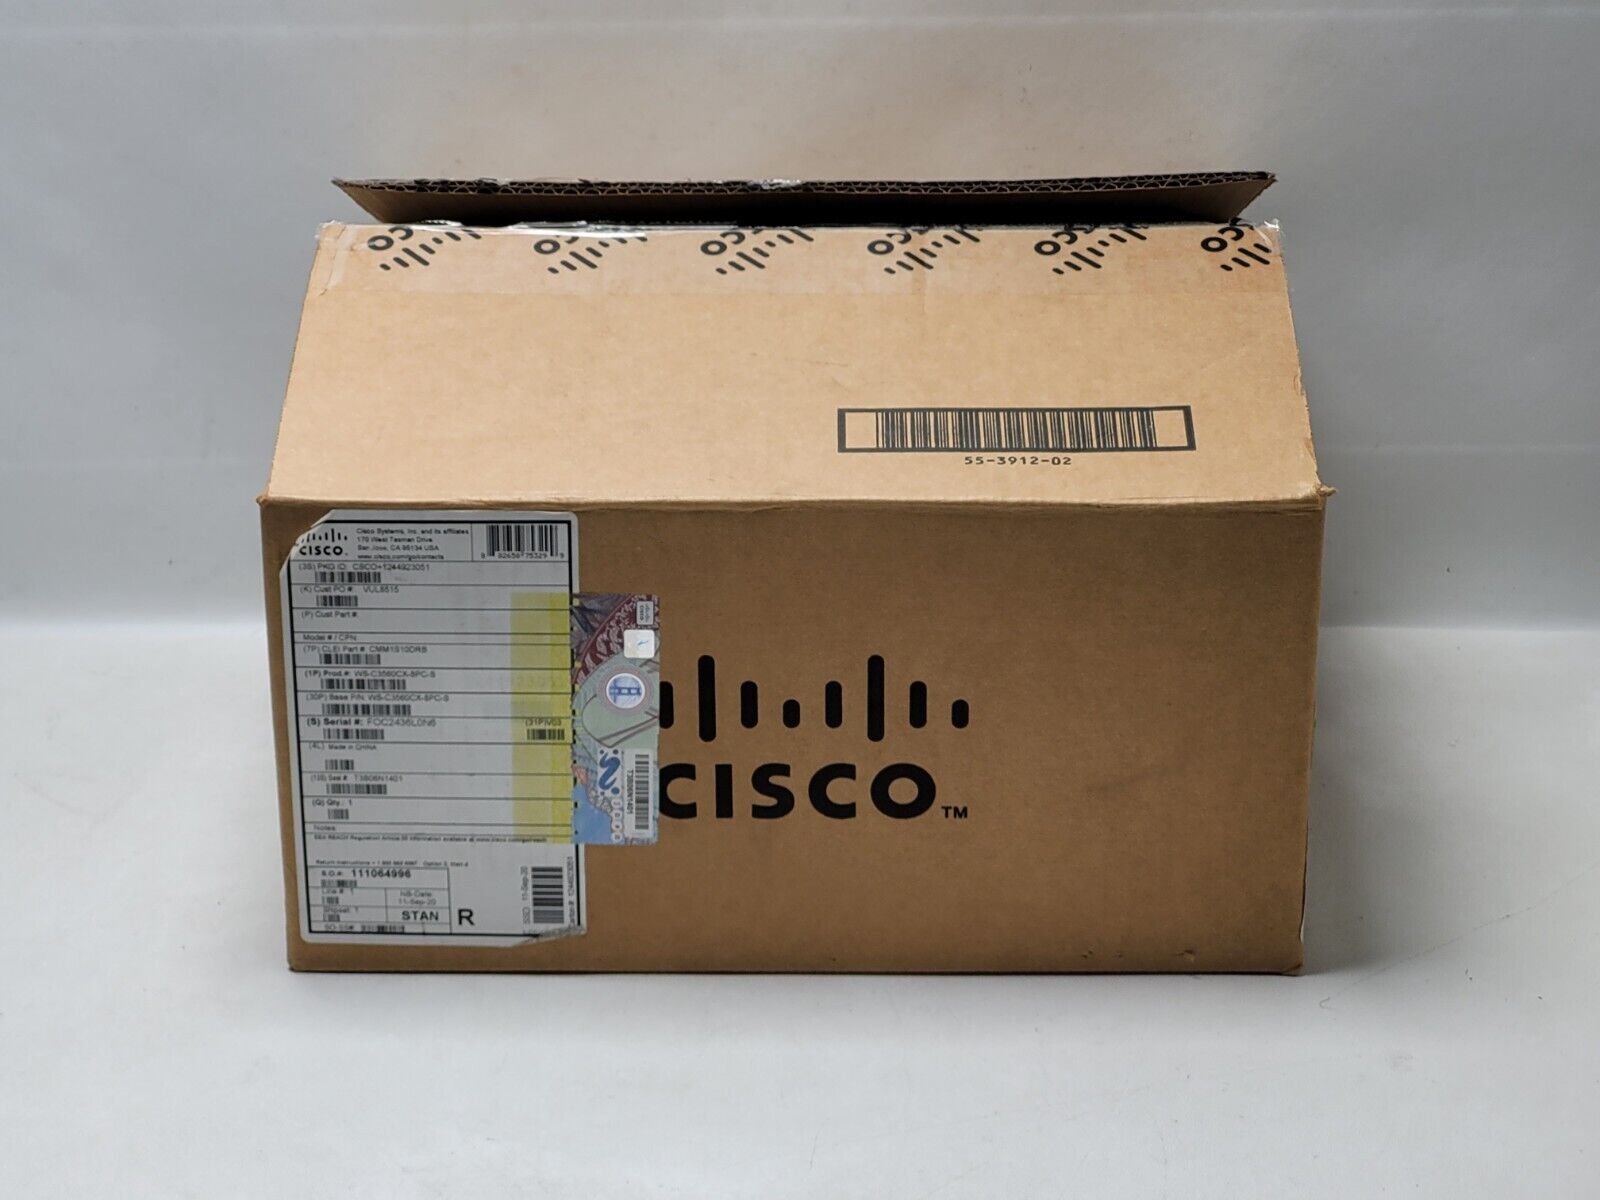 Cisco Catalyst 3560-CX 8-Port PoE+ Switch (WS-C3560CX-8PC-S) - NEW OPEN BOX